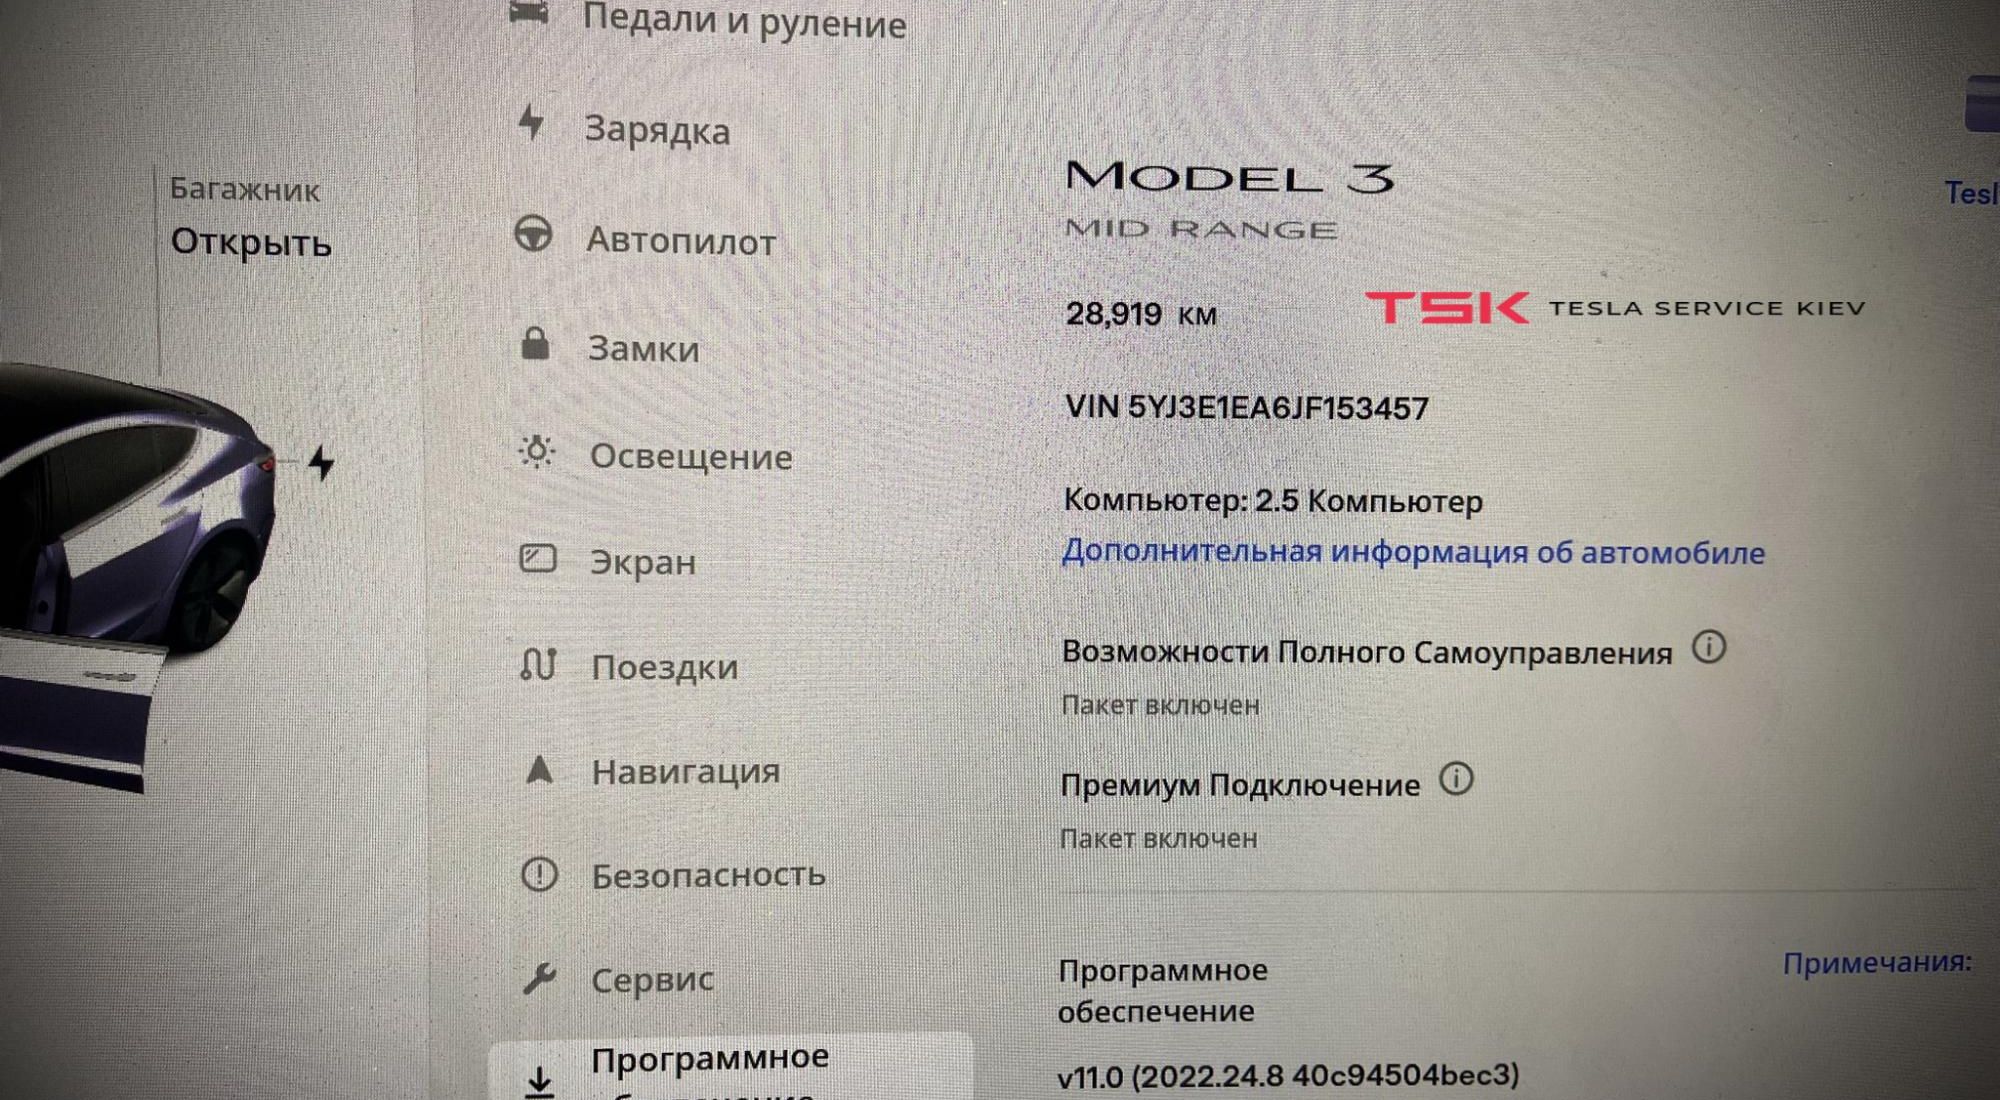 Tesla model 3 MID Range RWD